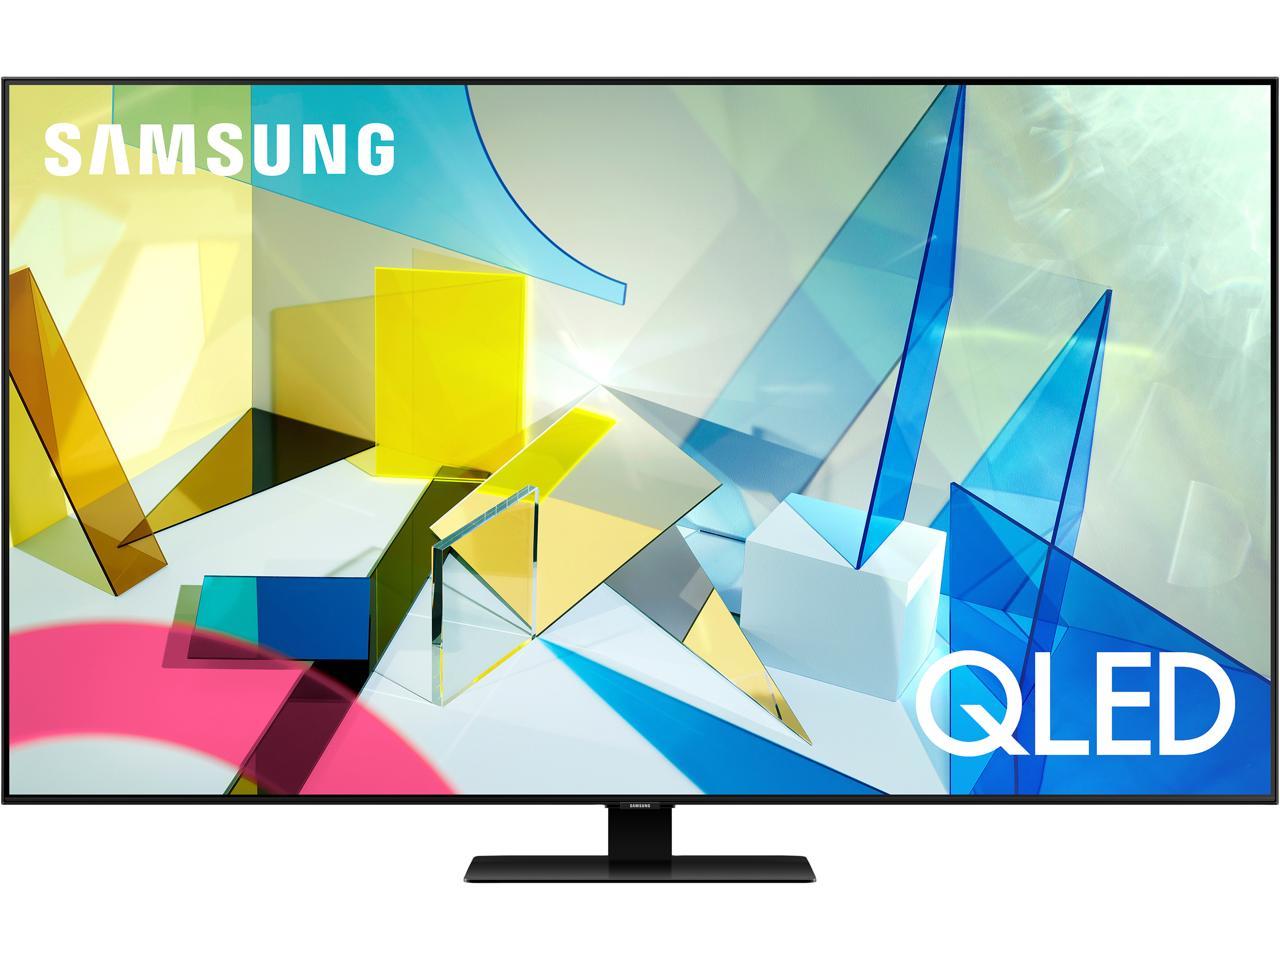 Samsung 65" Q80T QLED 4K UHD HDR TV